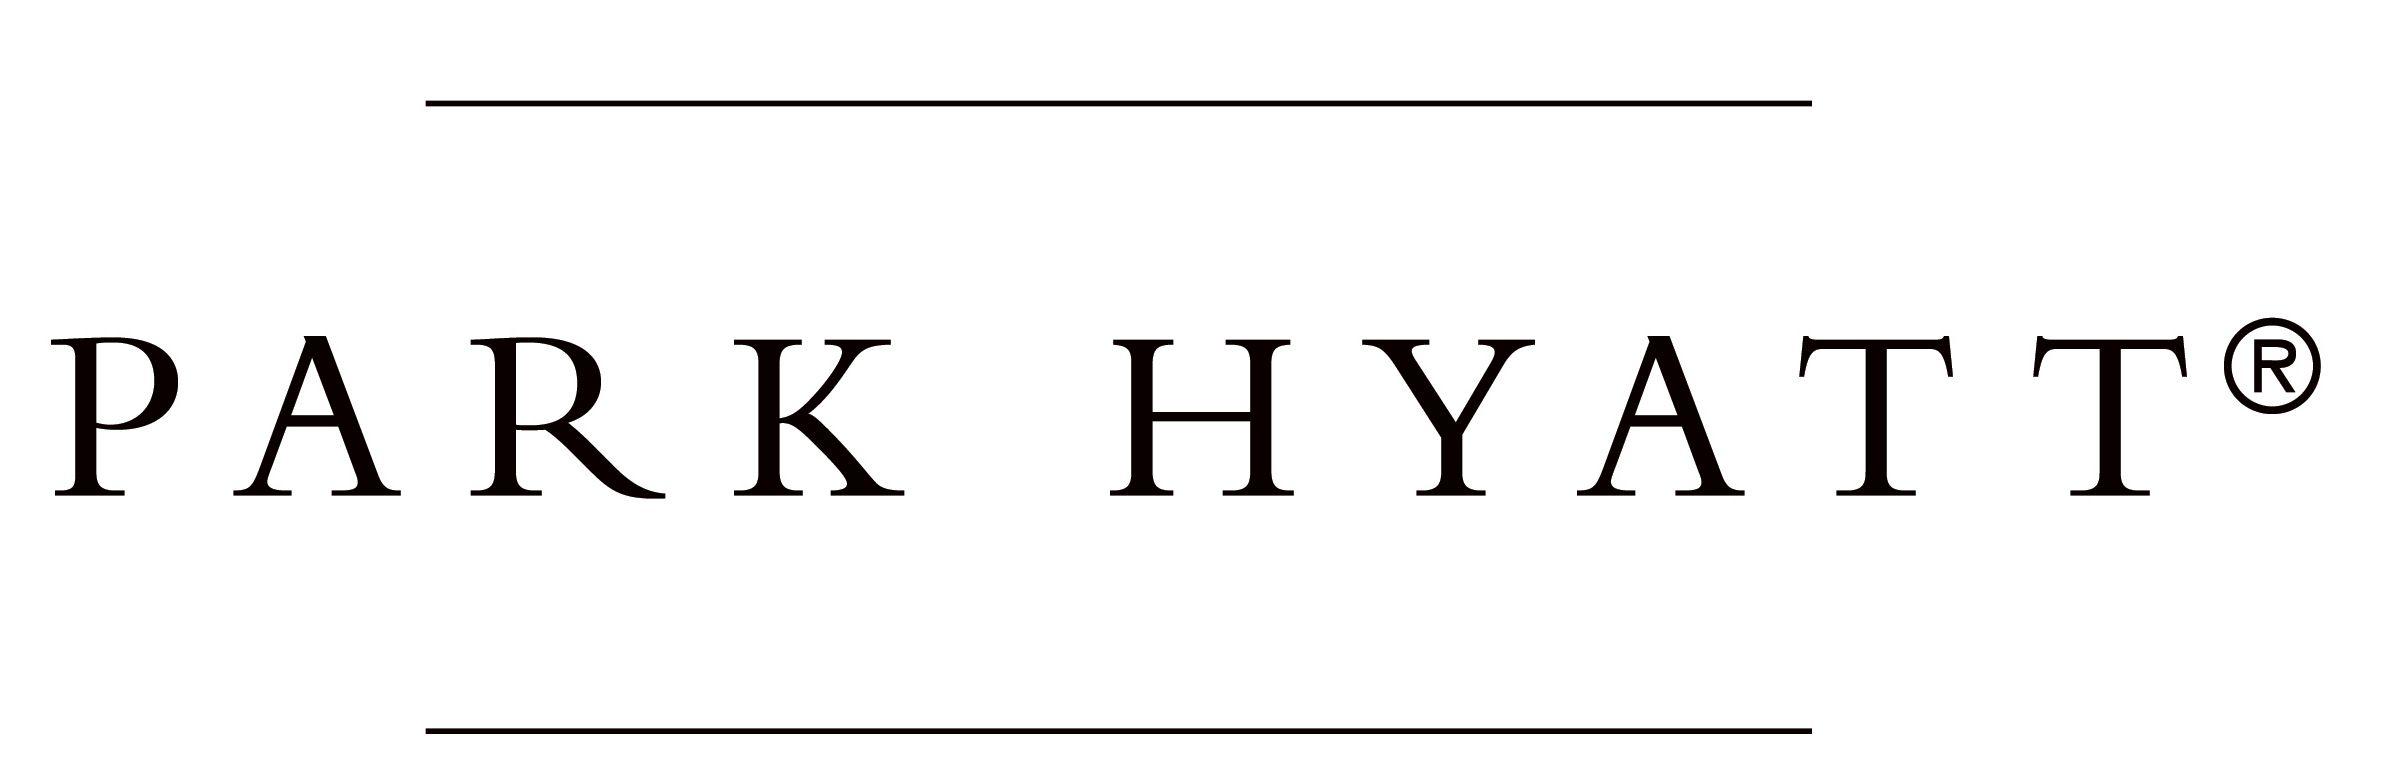 Hyatt Hotel Logo - MNC Land and Hyatt to Bring First Park Hyatt Hotel to Indonesia ...